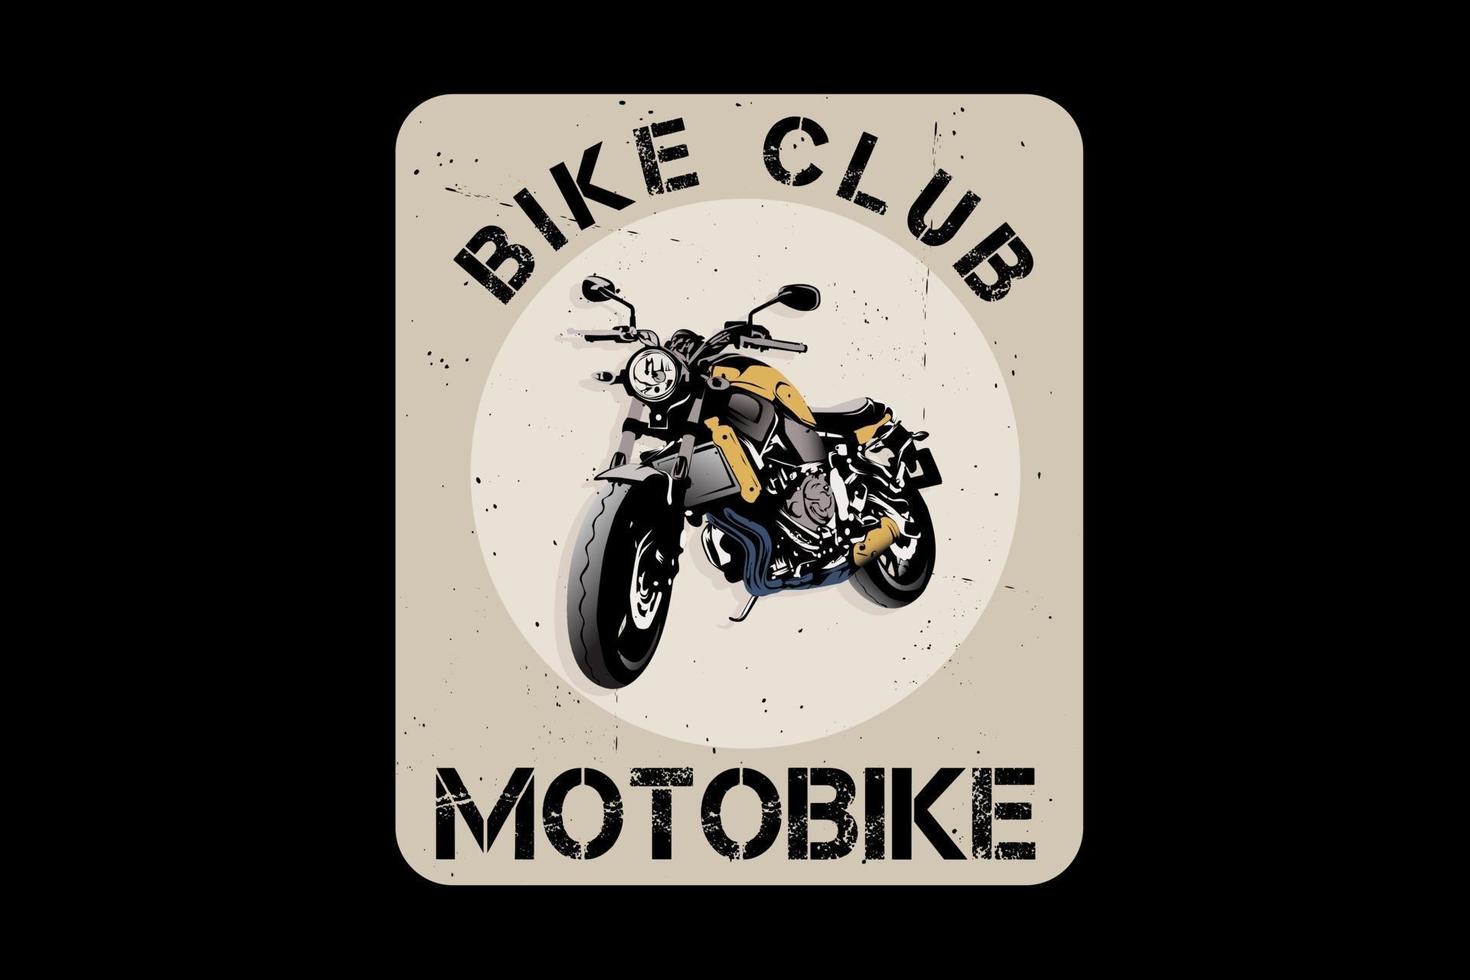 Motobike bike club silhouette design vector